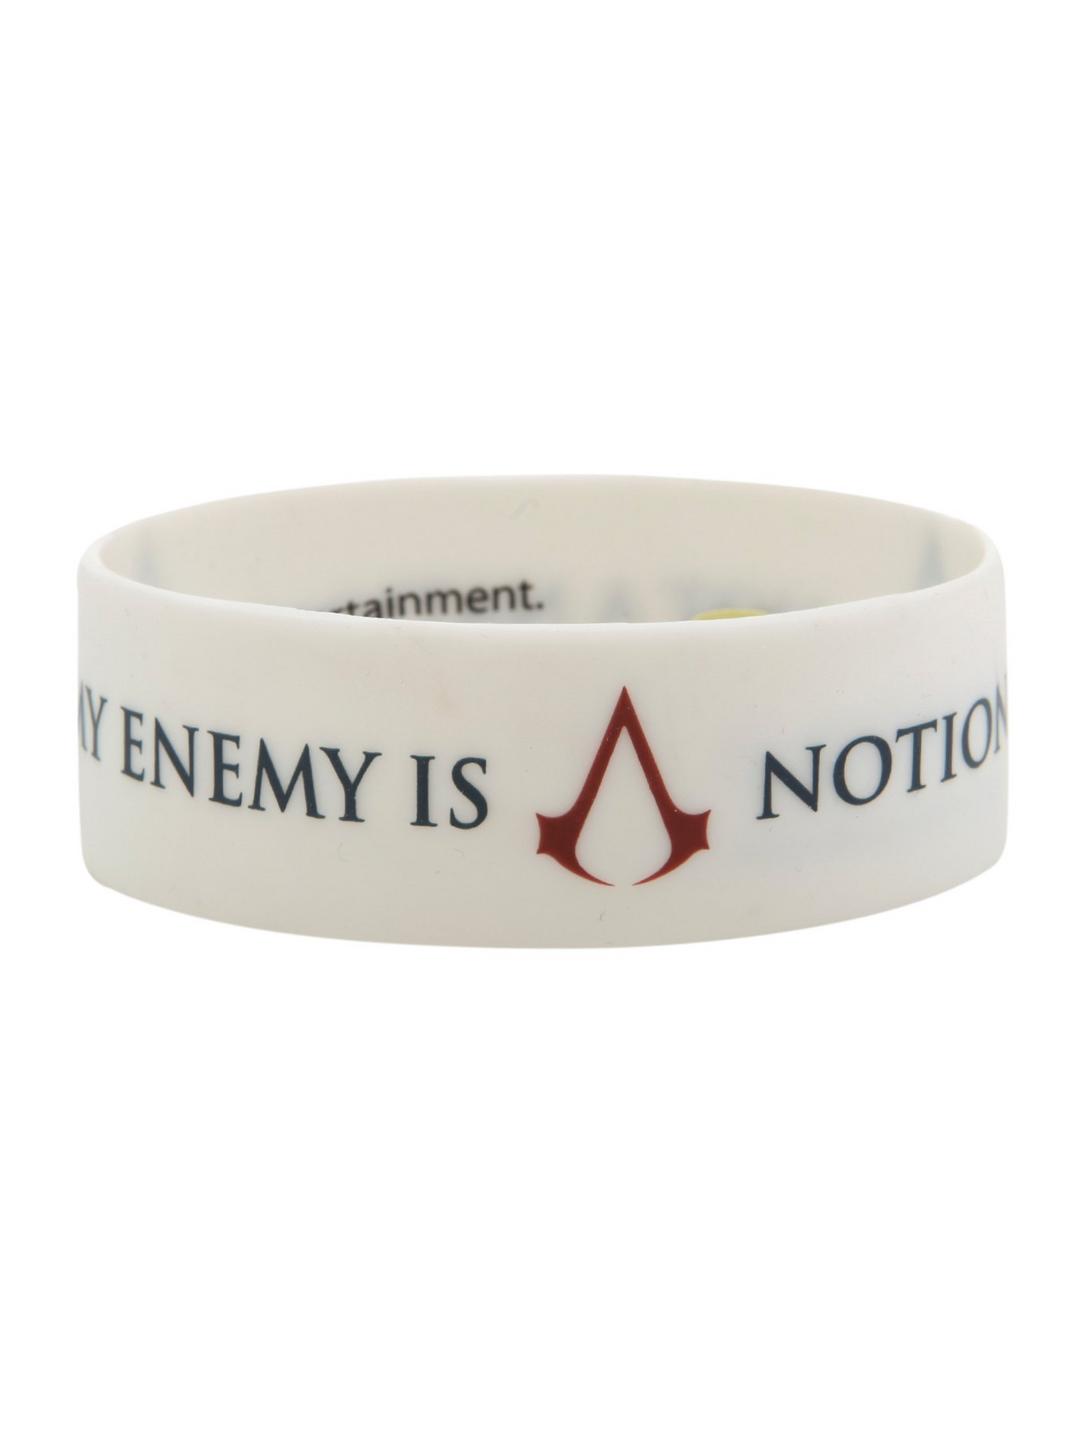 Assassin's Creed Notion Not Nation Rubber Bracelet, , hi-res